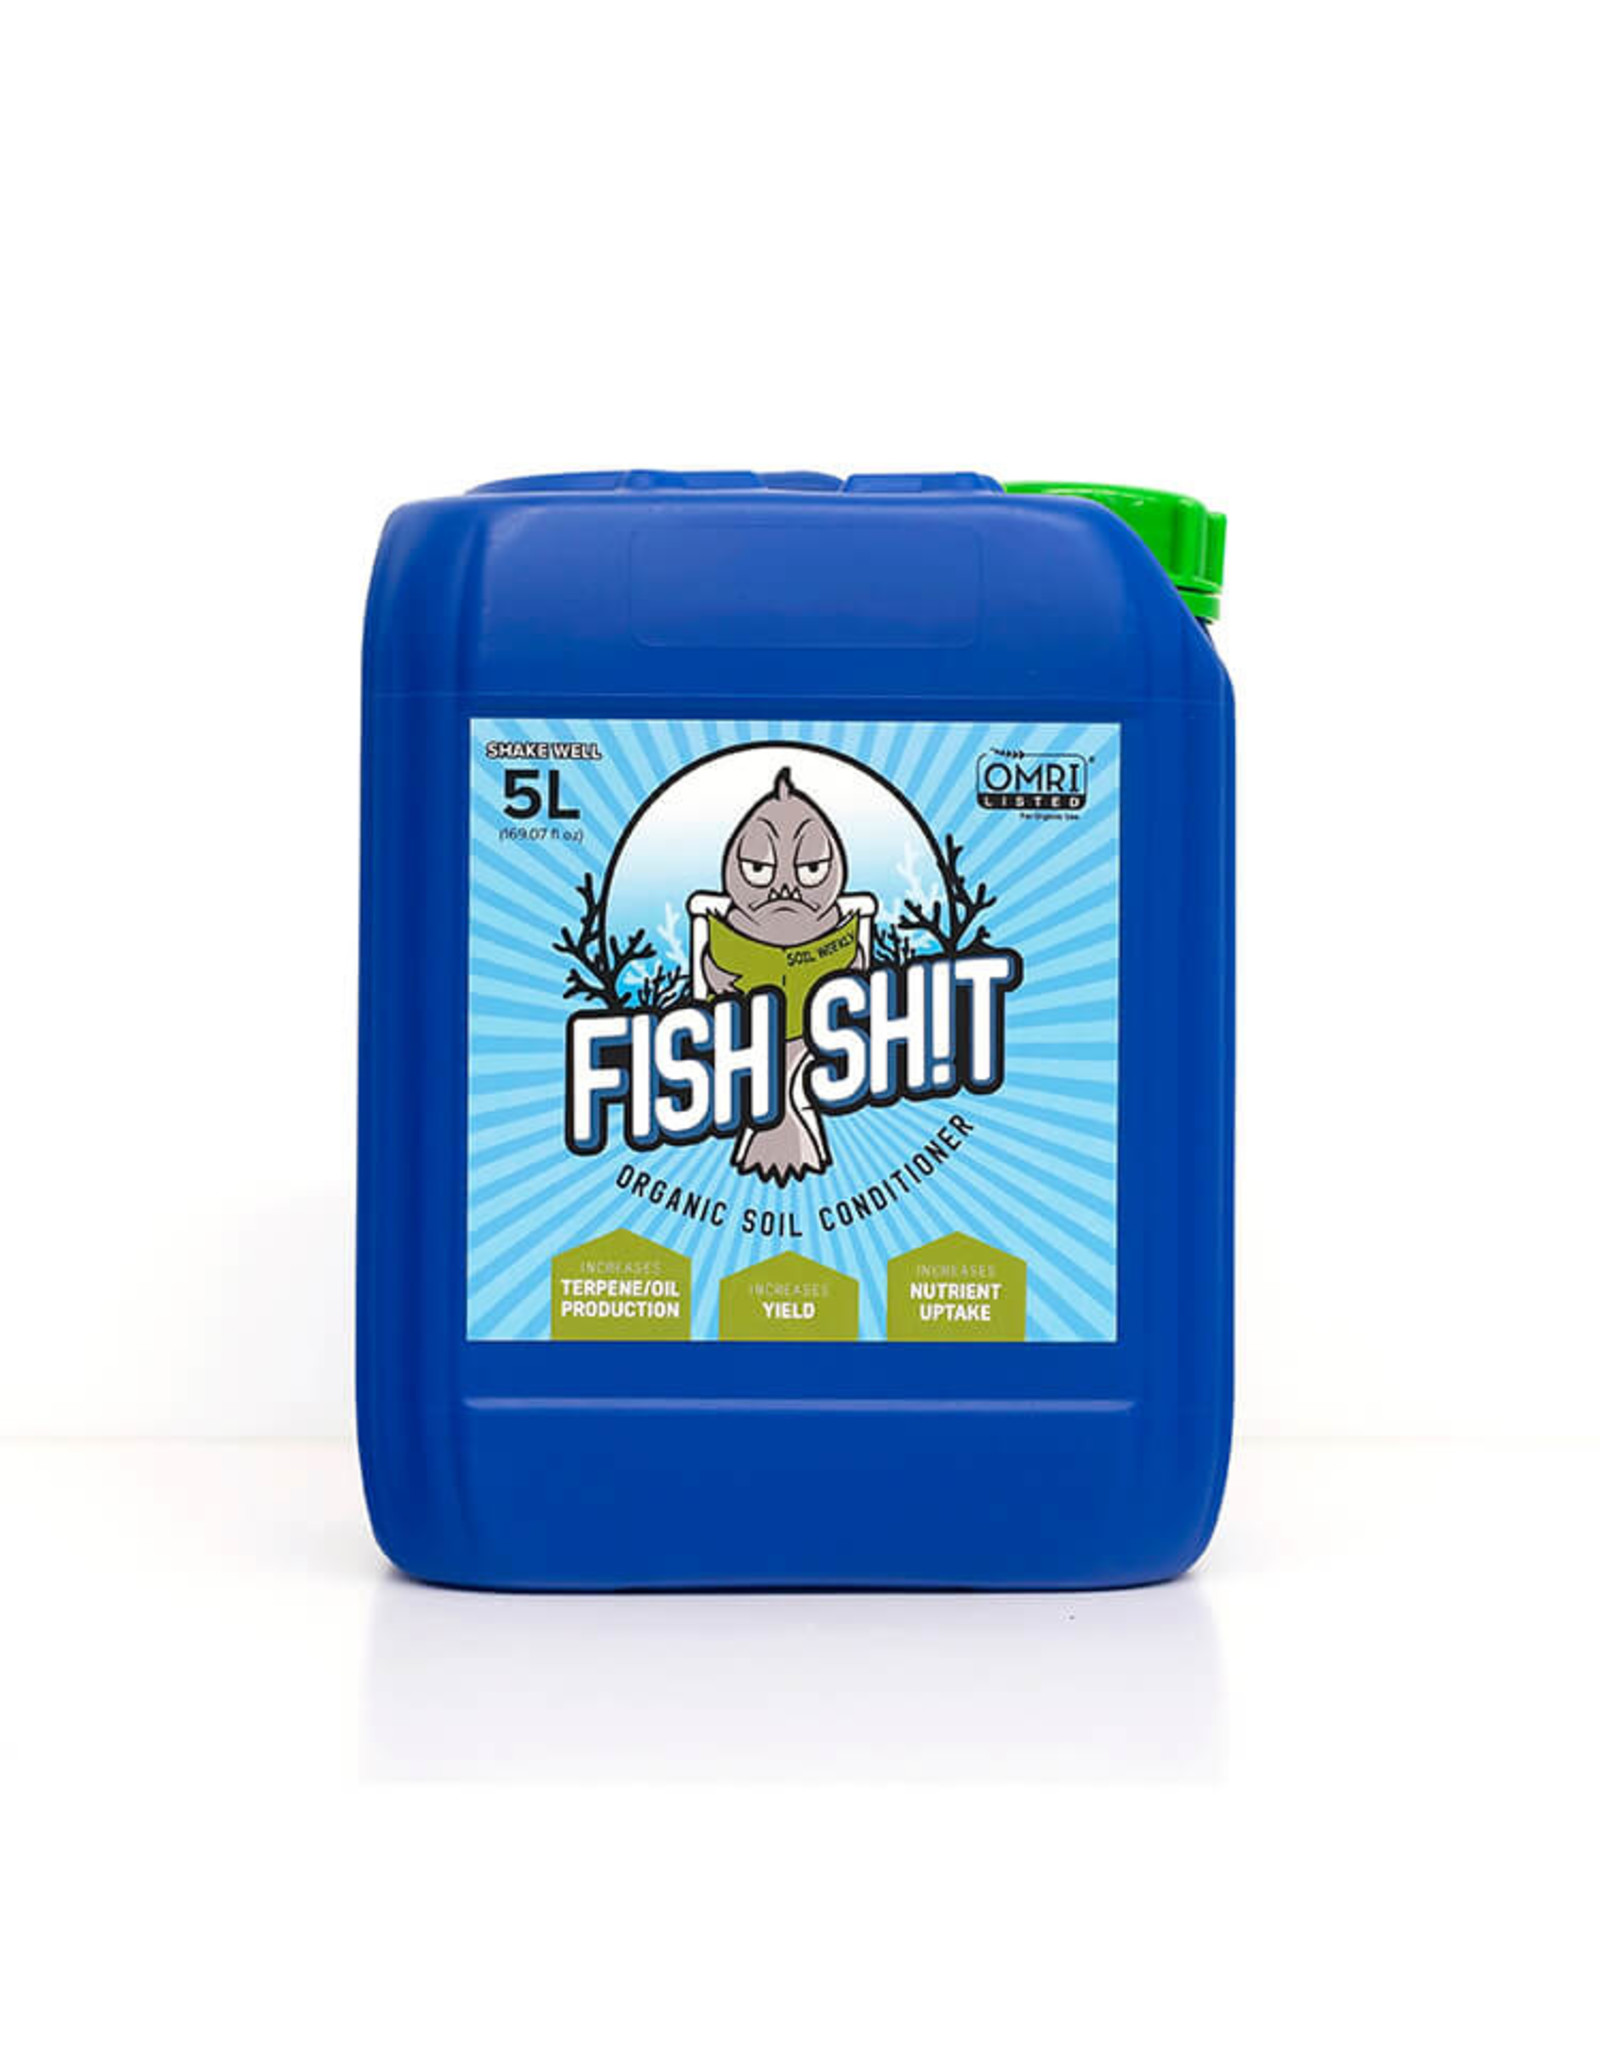 Fish Head Farms Fish Sh!t Organic Soil Conditioner - 5 Liter